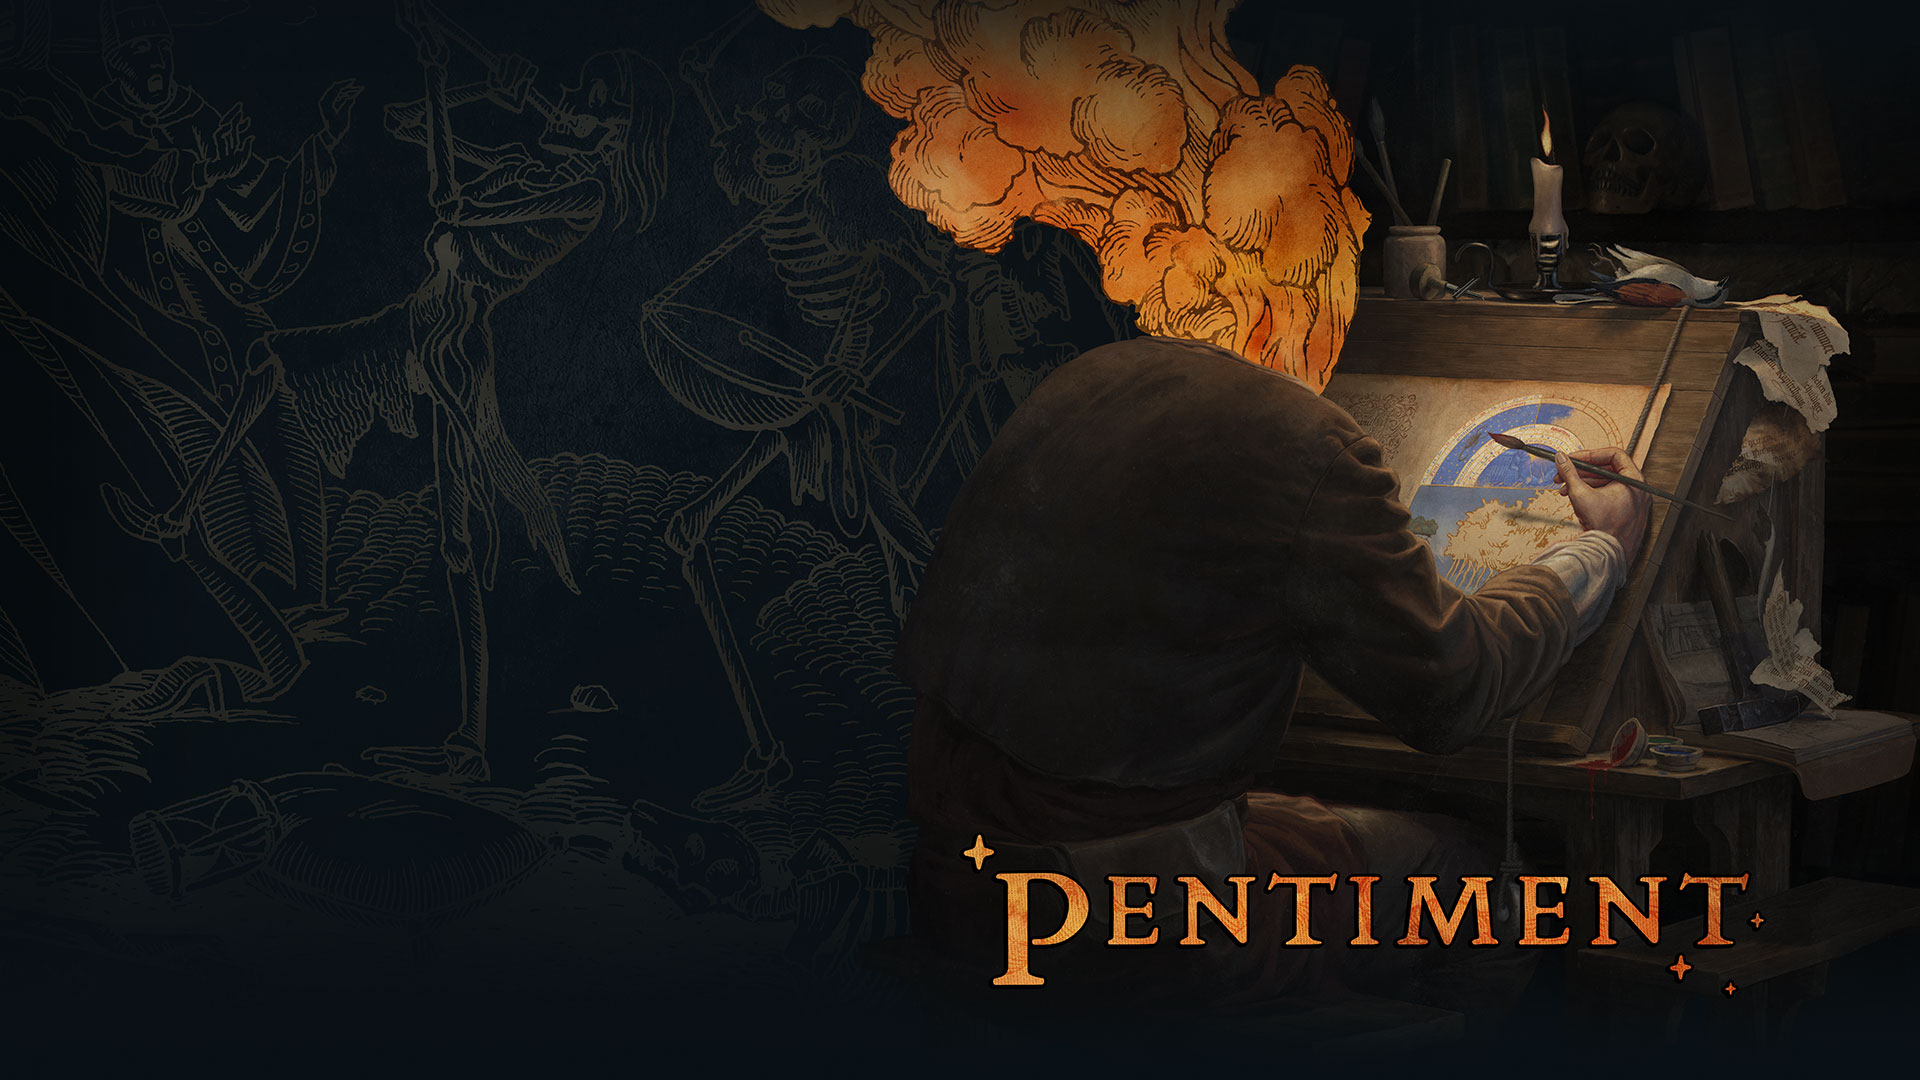 『Pentiment』:頭部がイラストの煙と雲になった絵描きの作業机に向かうキャラクター